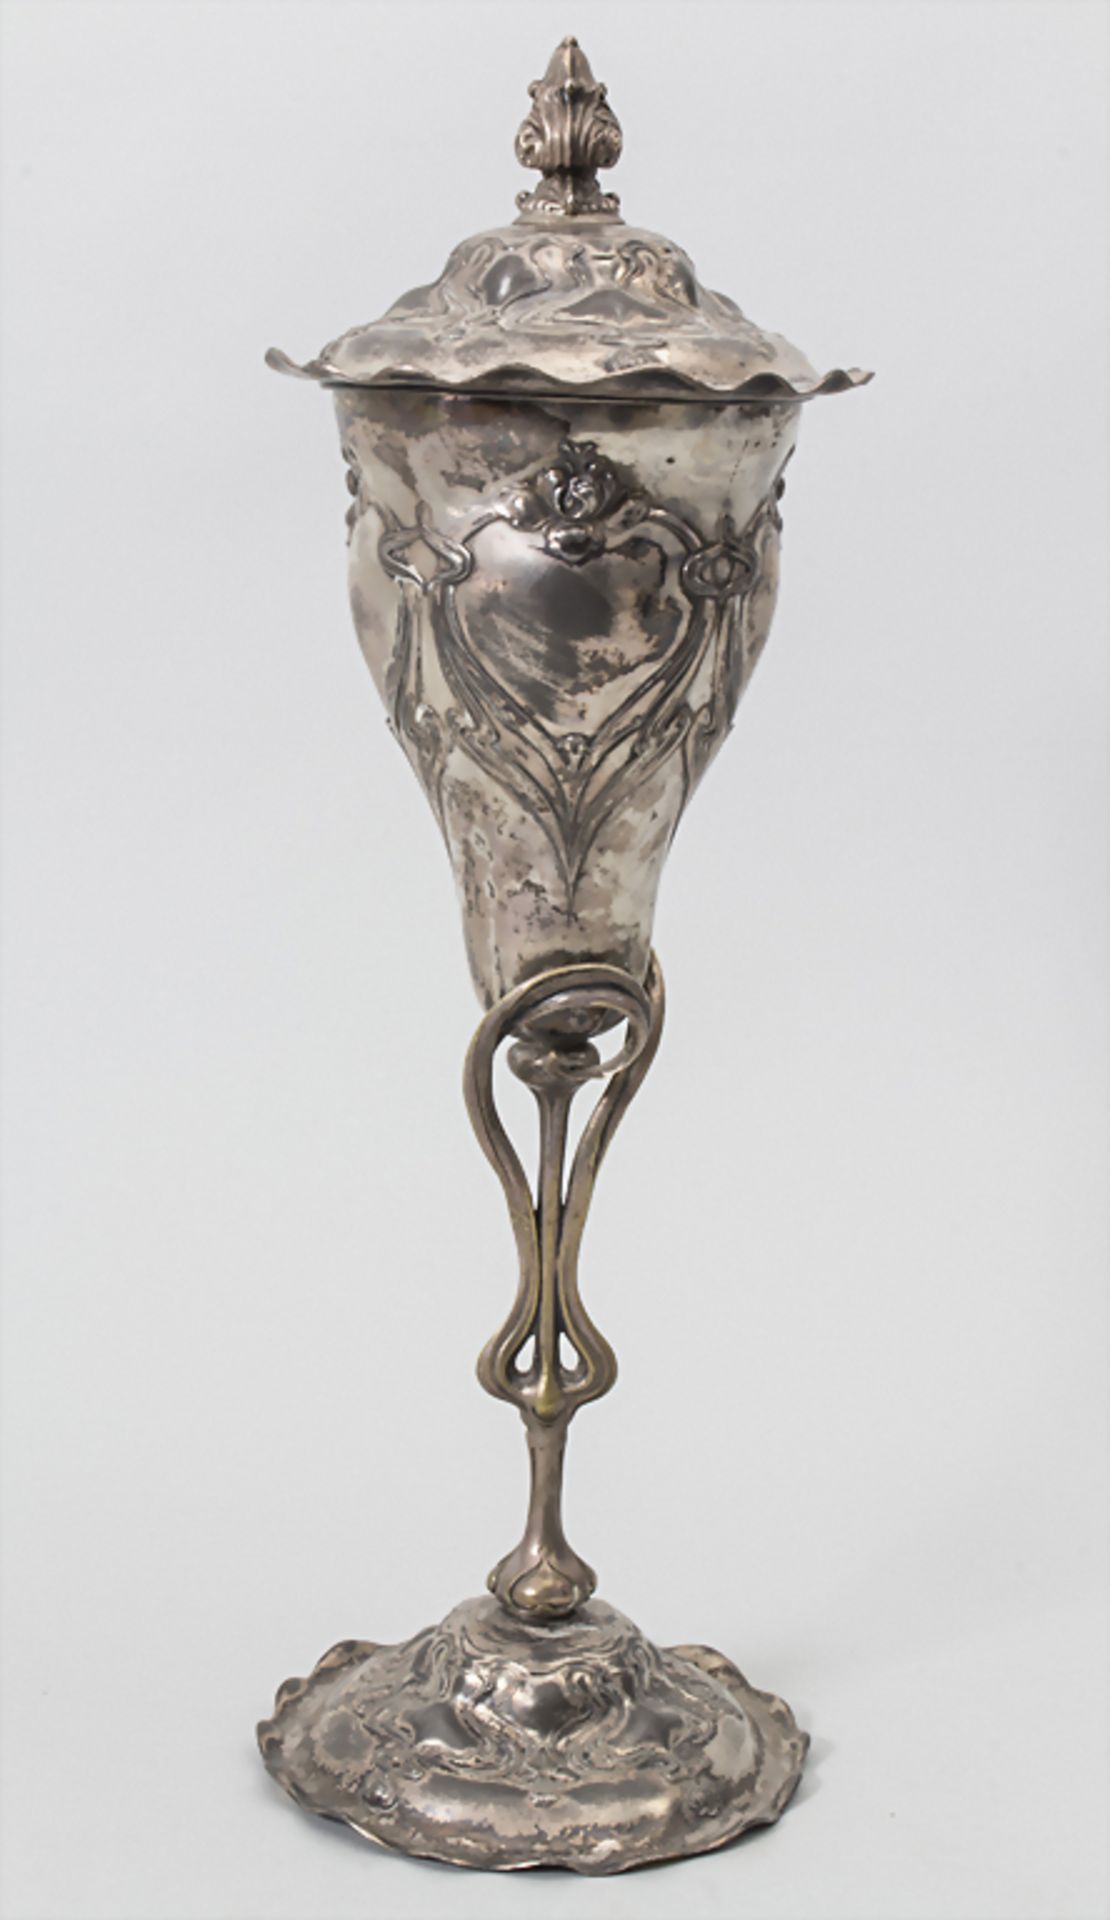 Jugendstil Deckelpokal / An Art Nouveau lidded goblet, WMF, um 1905Material: Britannia